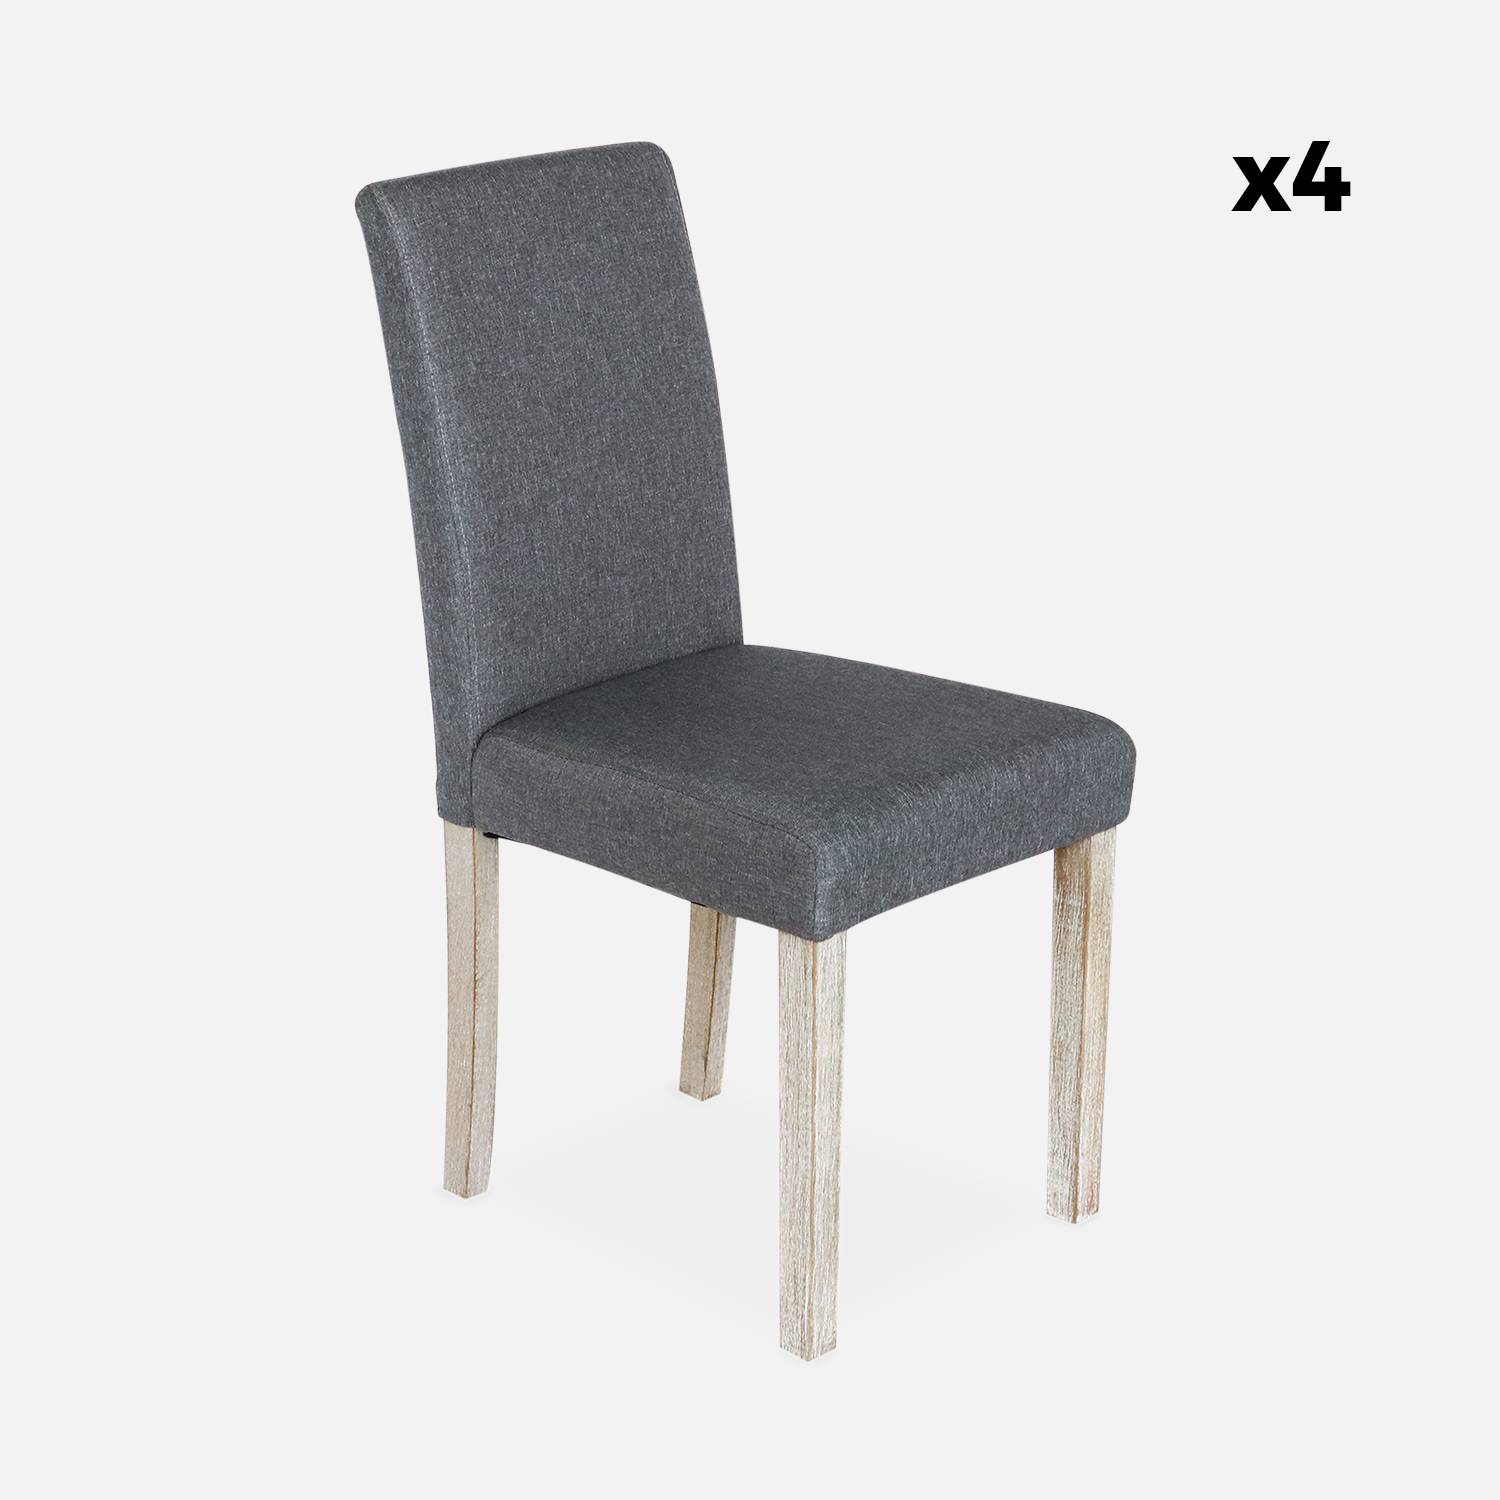 Set di 4 sedie - Rita - sedie in tessuto, gambe in legno ceruleo, grigio scuro Photo6